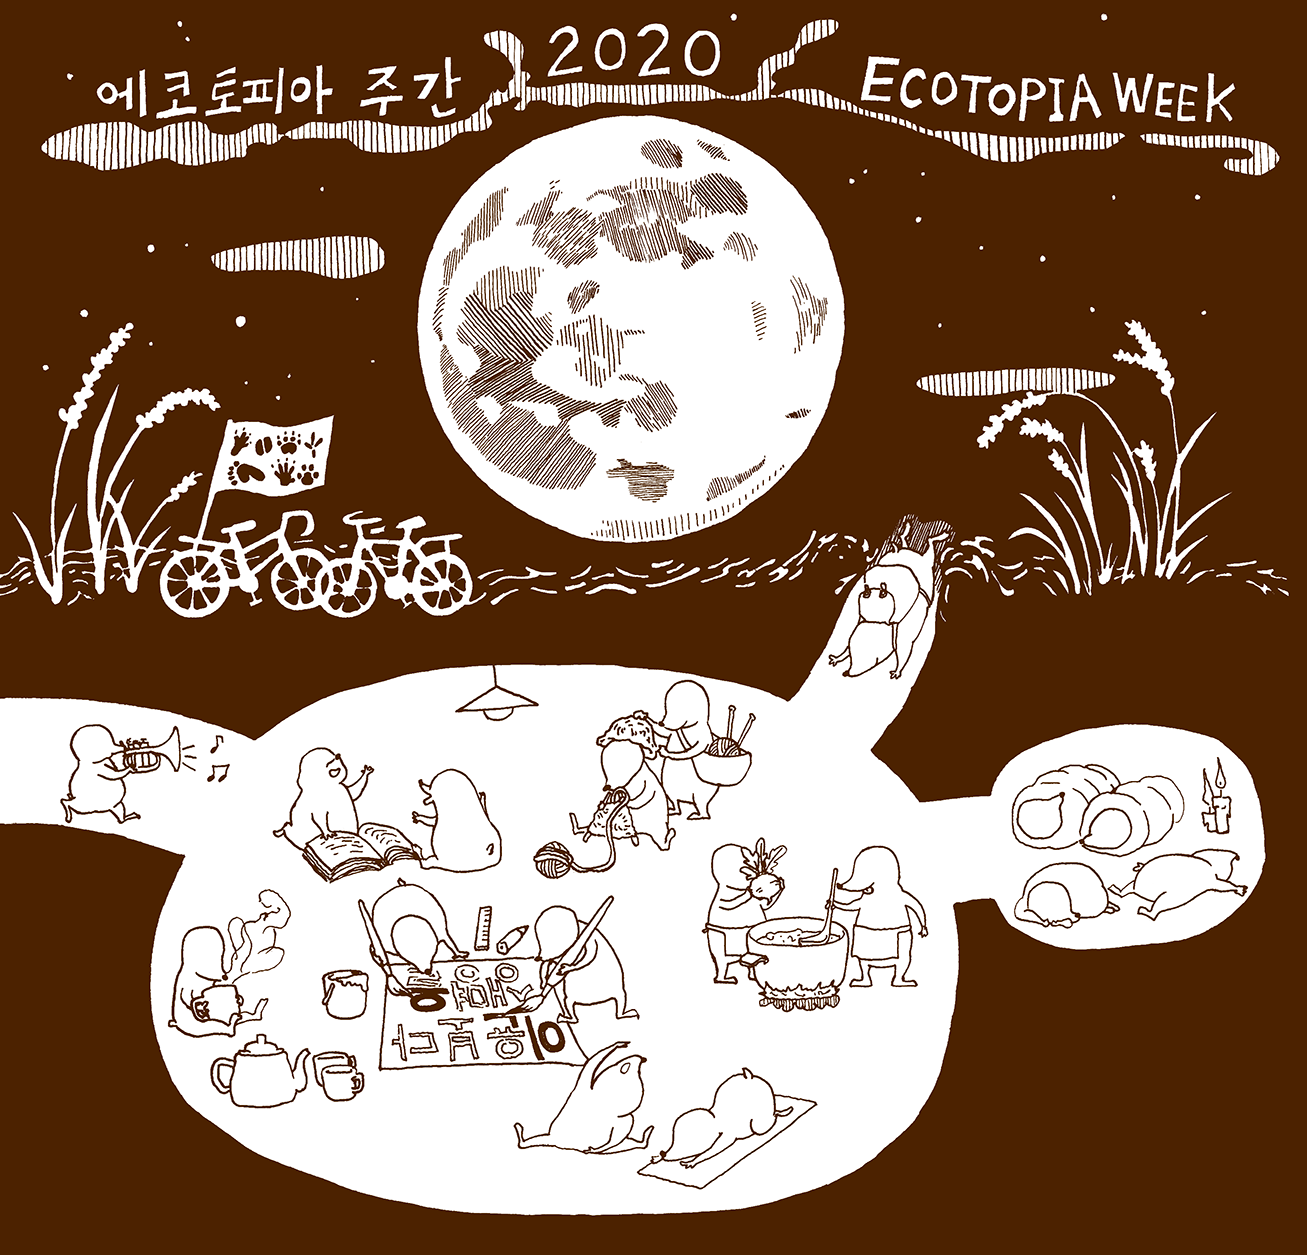 2020 ecotopia week_web01.png